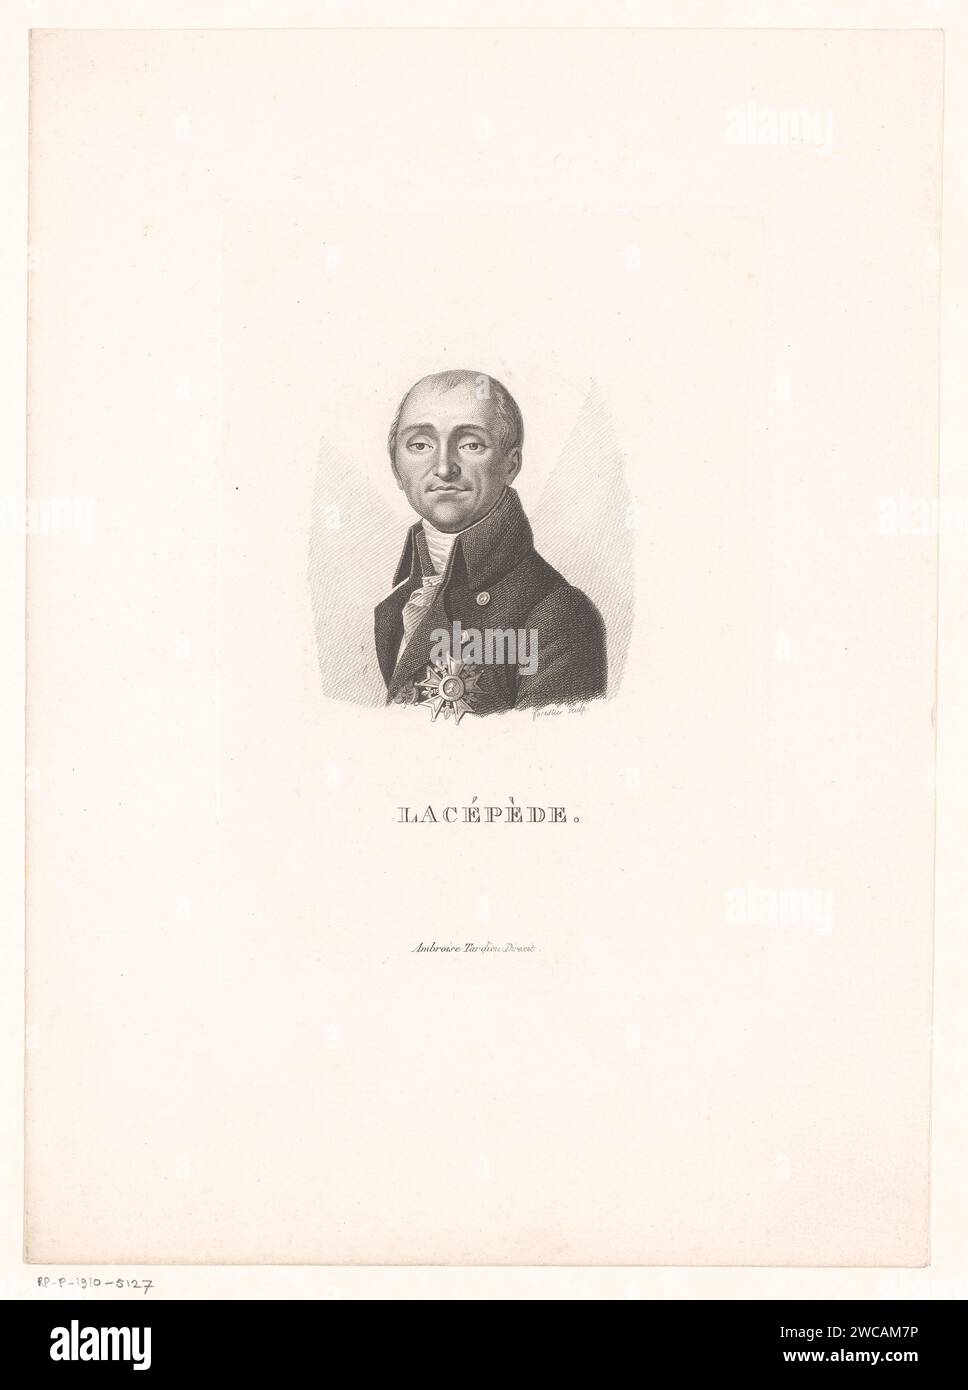 Portret van Bernard Germain de Lacépède, Charles Aimé Forestier, 1799 - 1831 Druckerei: ParisFrance Papierstich historischer Personen. Gelehrter, Philosoph Stockfoto